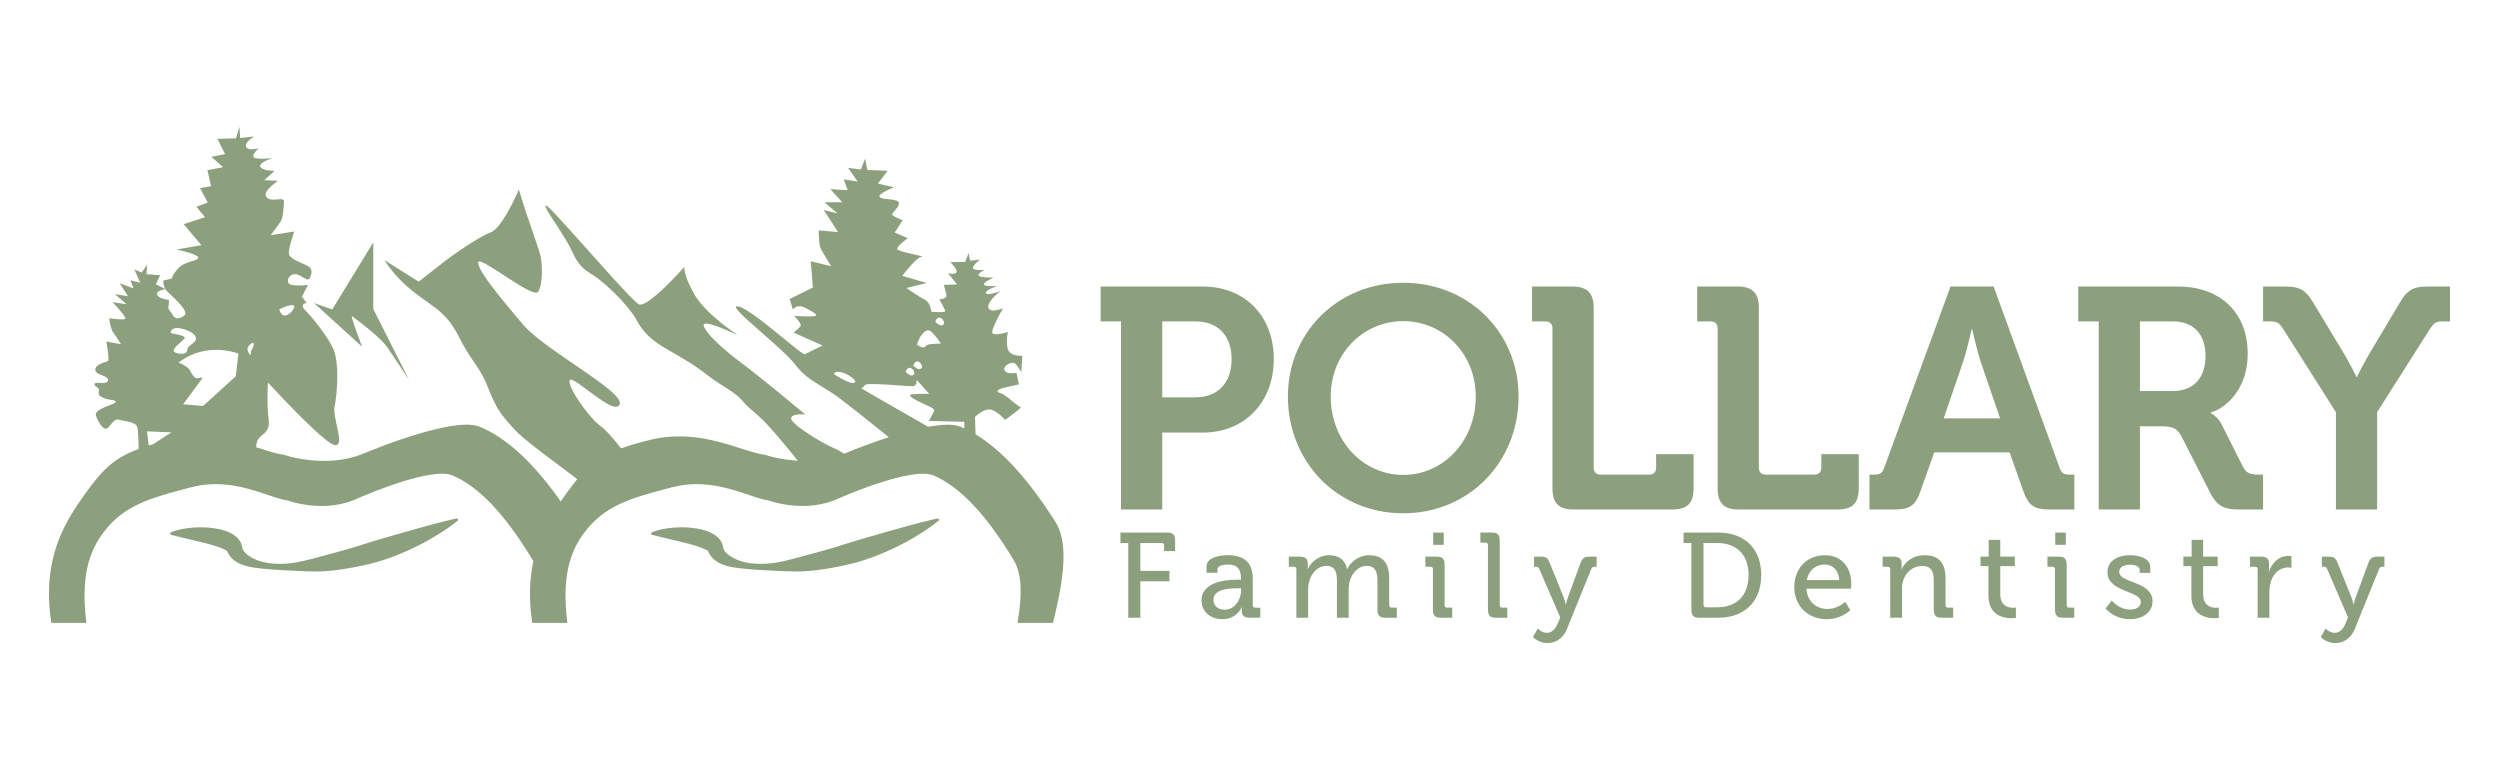 Business logo of Pollary Family Dentistry